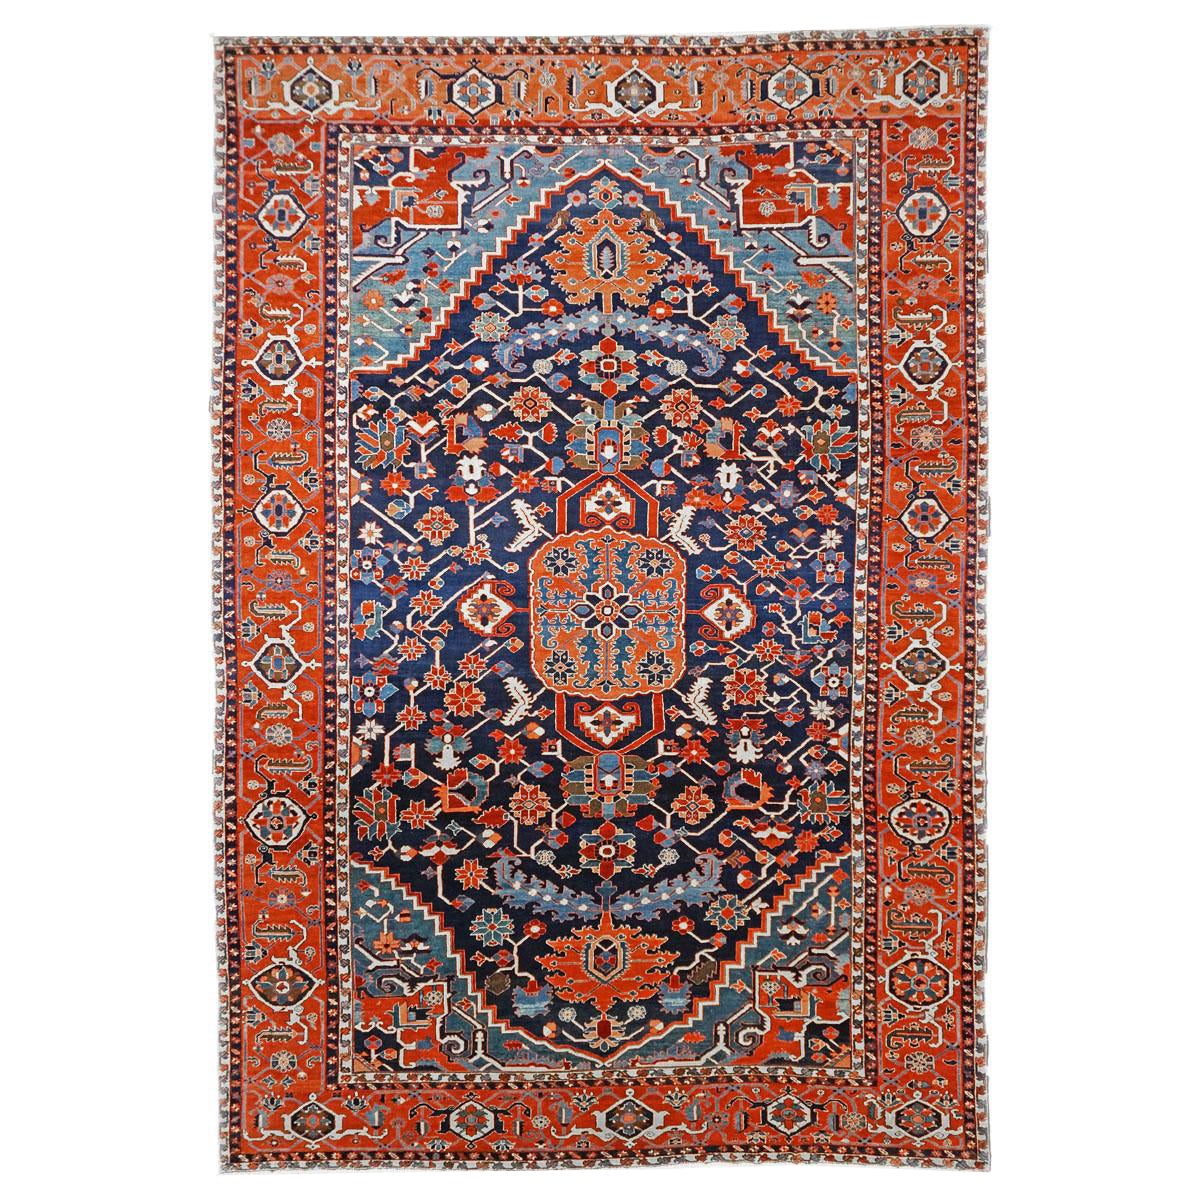 Antique Mohadjeran US Reimport Fine Persian Carpet Oriental rug 1.51 X 1.02 